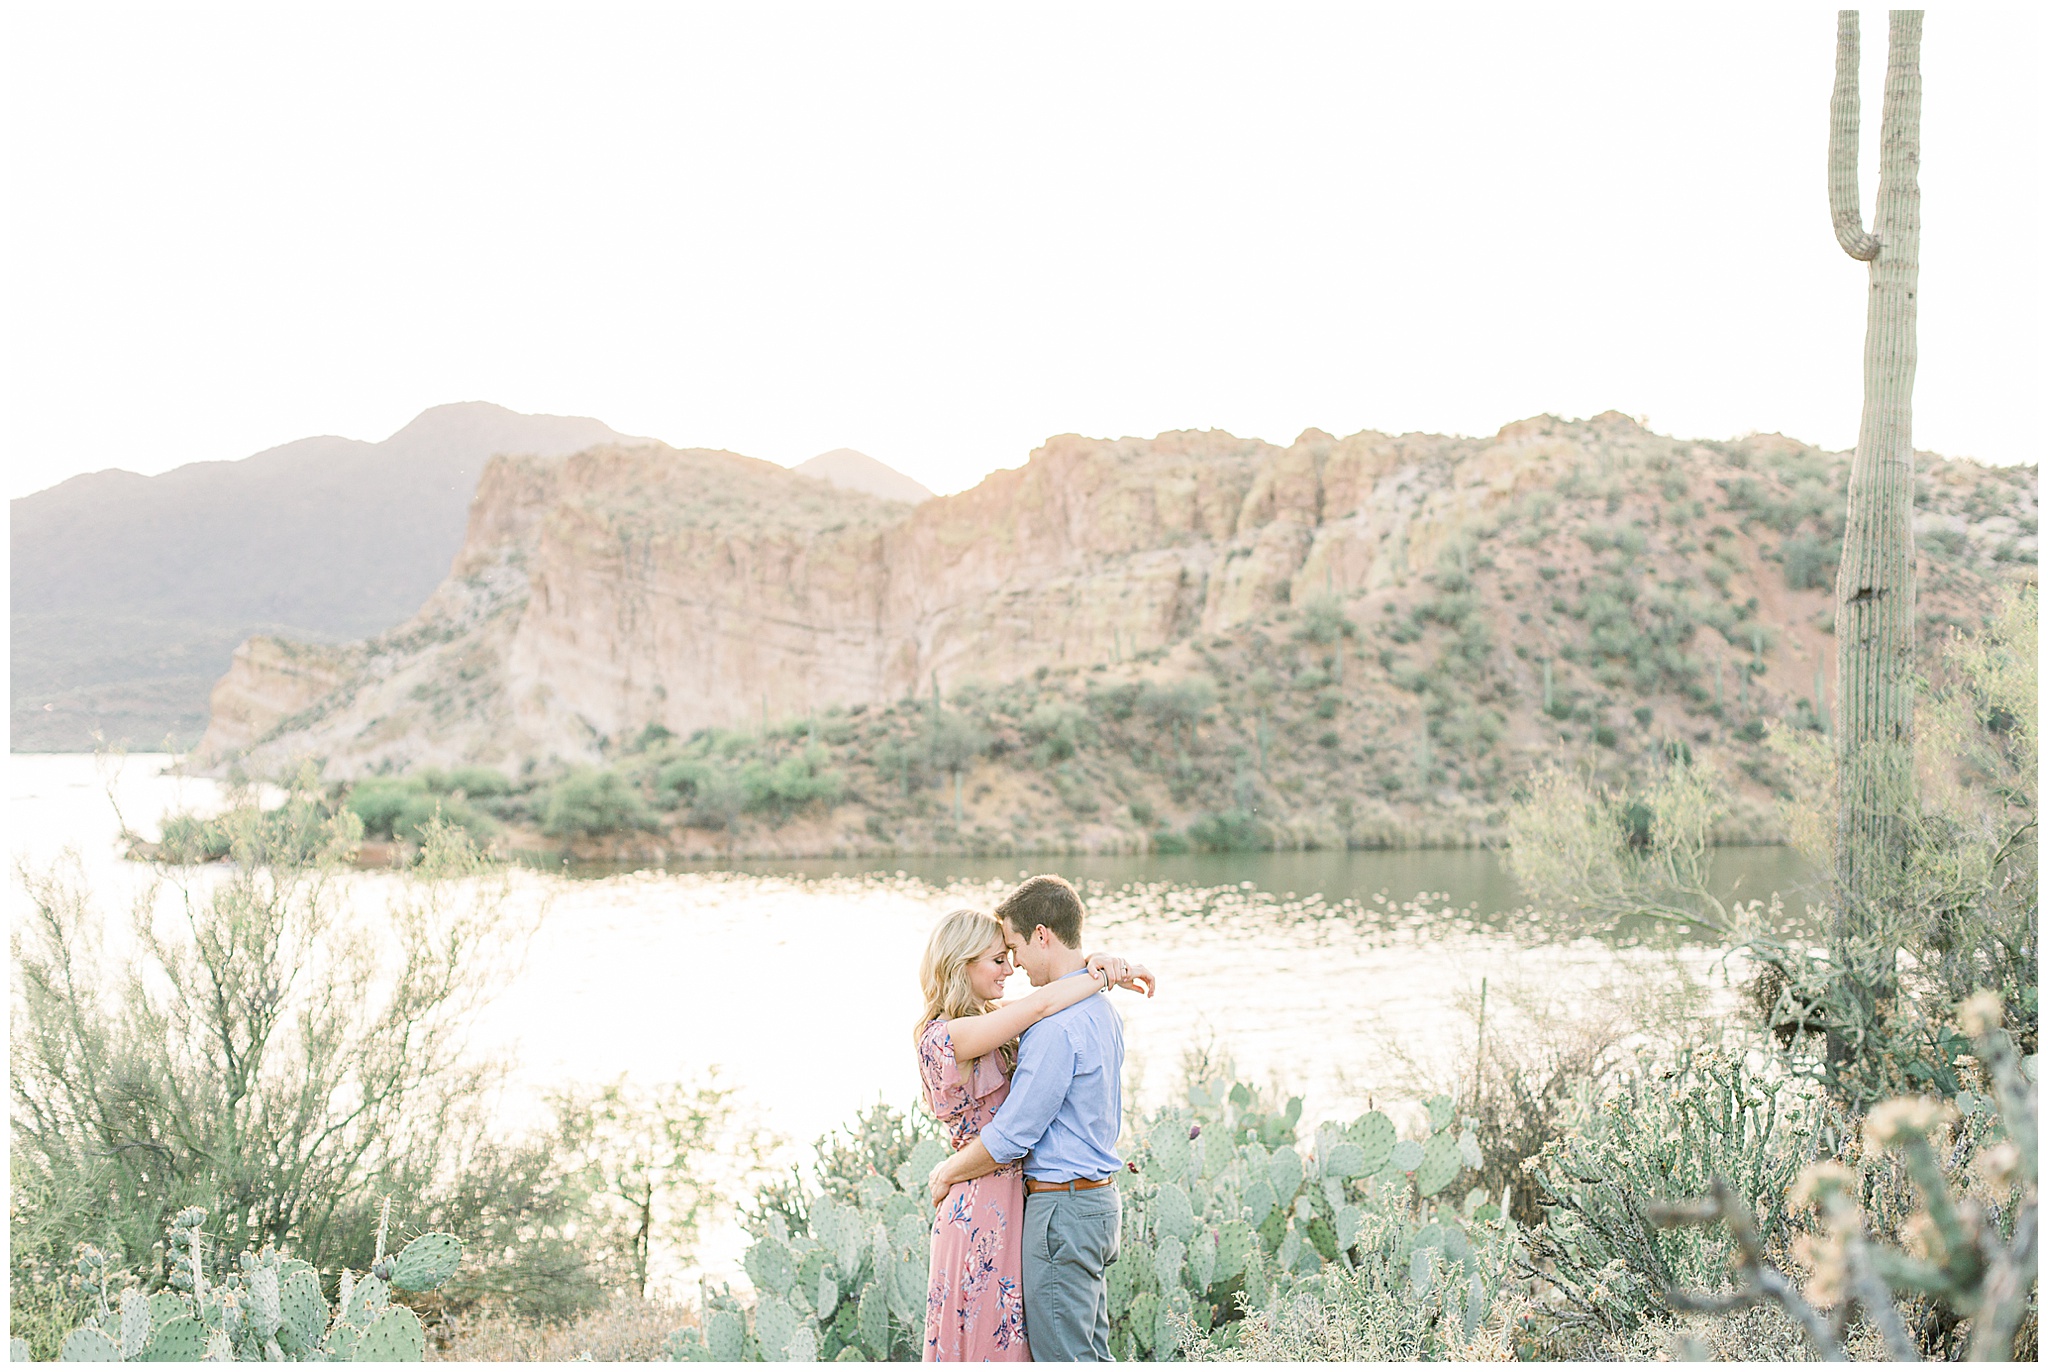 Aly-Kirk-Photo-Arizona-Photographer-Butcher-Jones-Couples-Engagement-Desert-Lake-Mountains